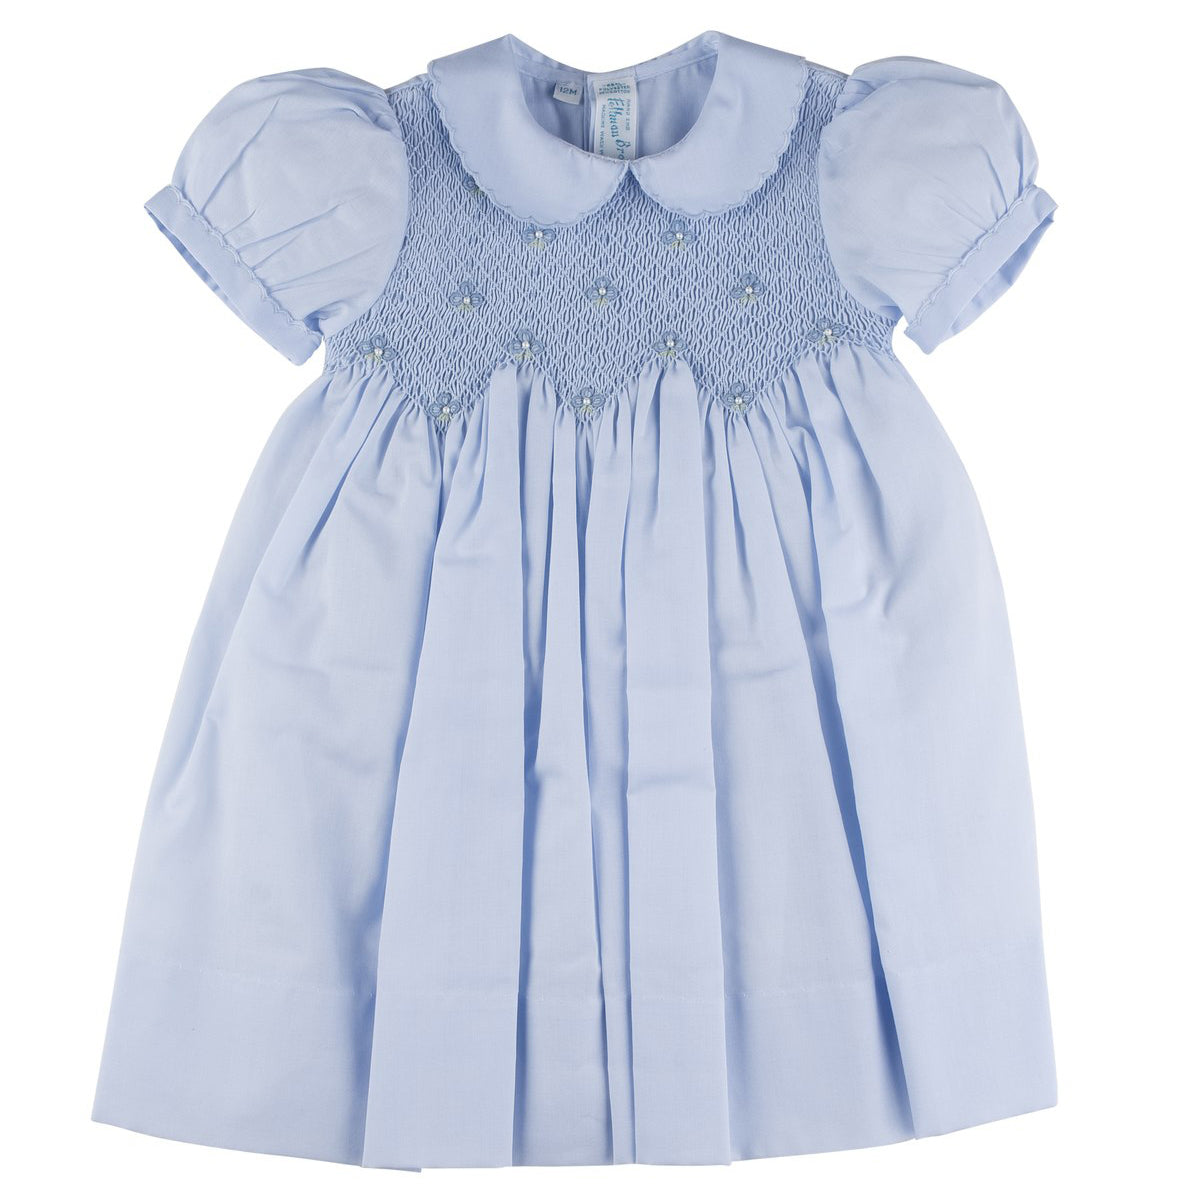 Scalloped Pearl Smocked Dress in Blue  - Doodlebug's Children's Boutique